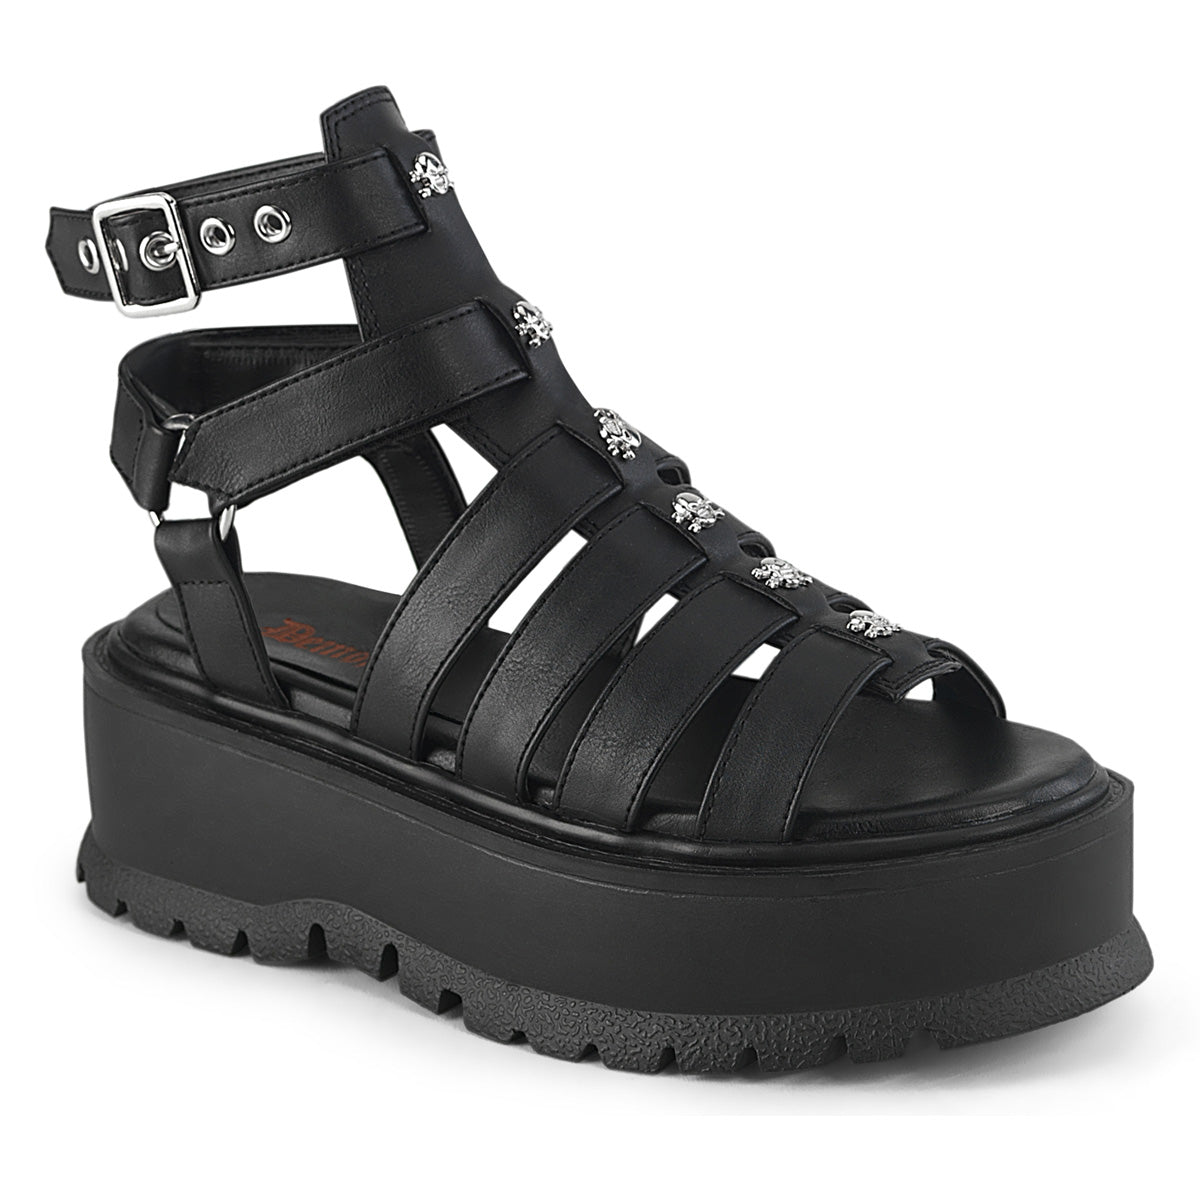 Skull Gladiator Style Platform Sandals